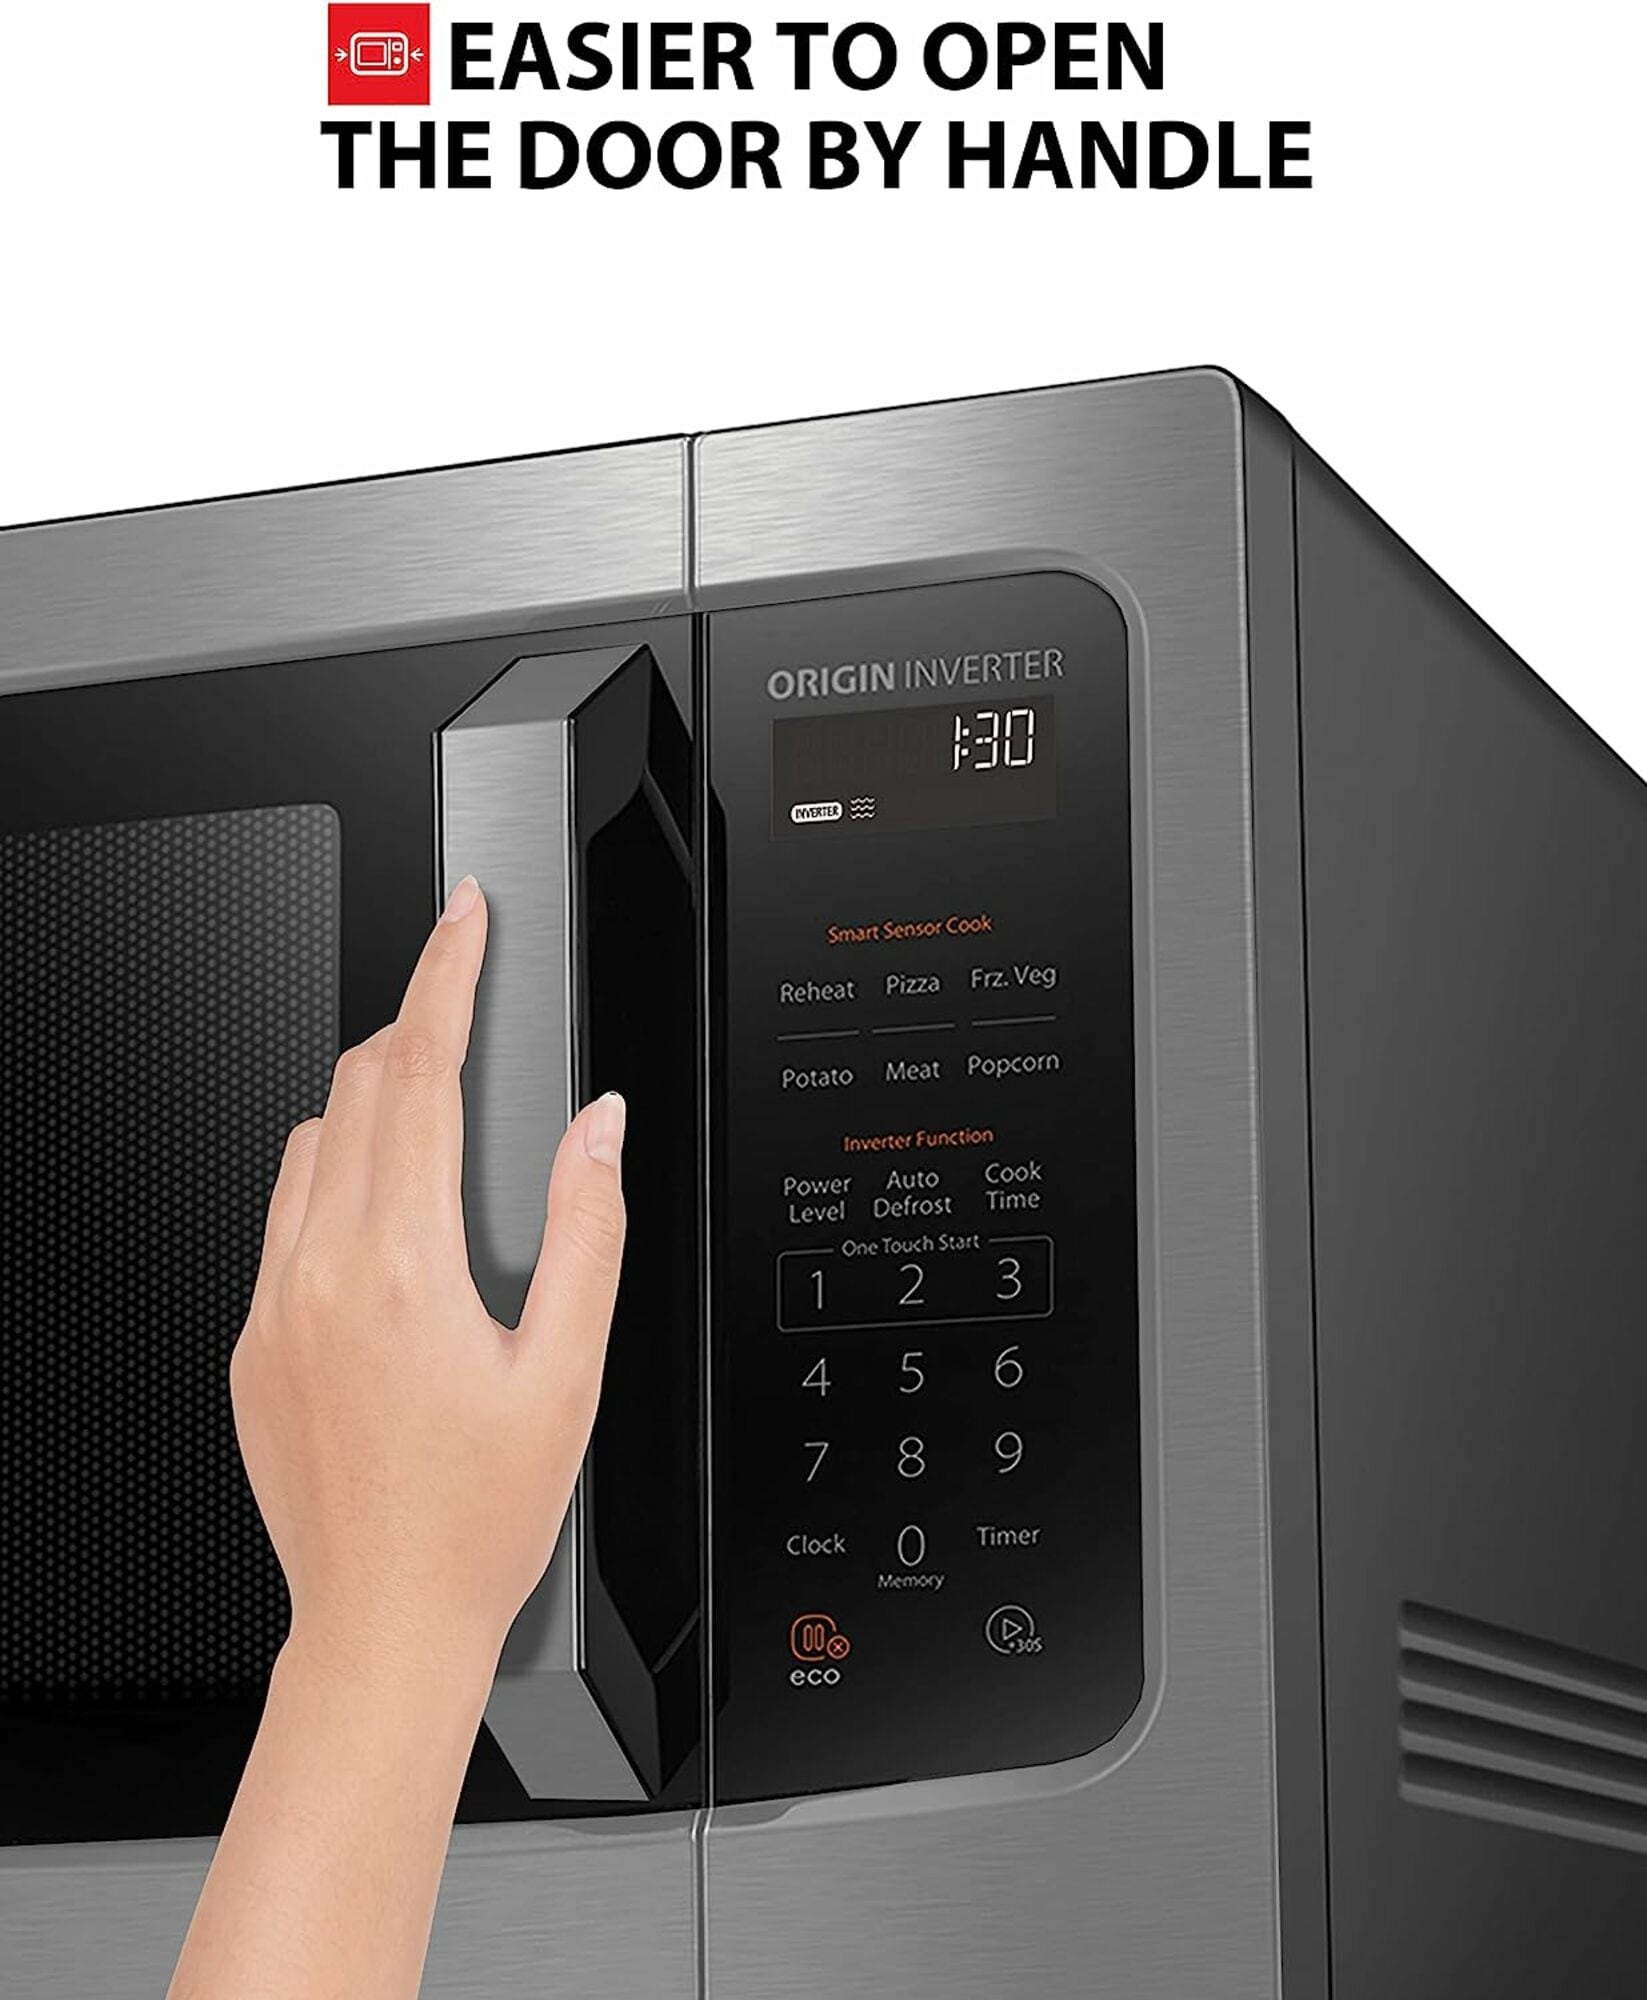 Toshiba ML-EM45P(BS), Microwave Oven, Black